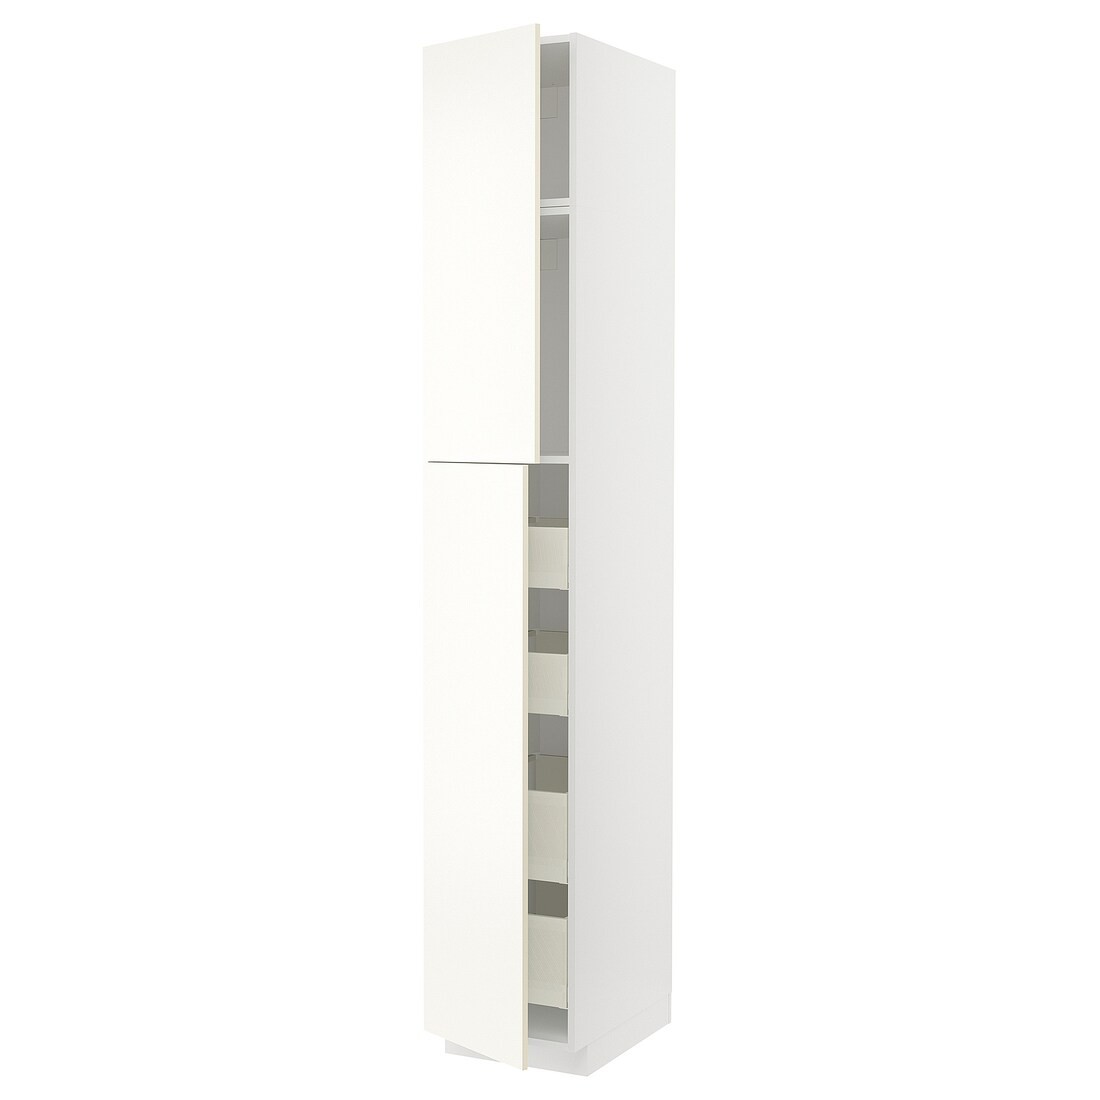 IKEA METOD МЕТОД / MAXIMERA МАКСИМЕРА Шкаф высокий 2 двери / 4 ящика, белый / Vallstena белый 99507415 | 995.074.15